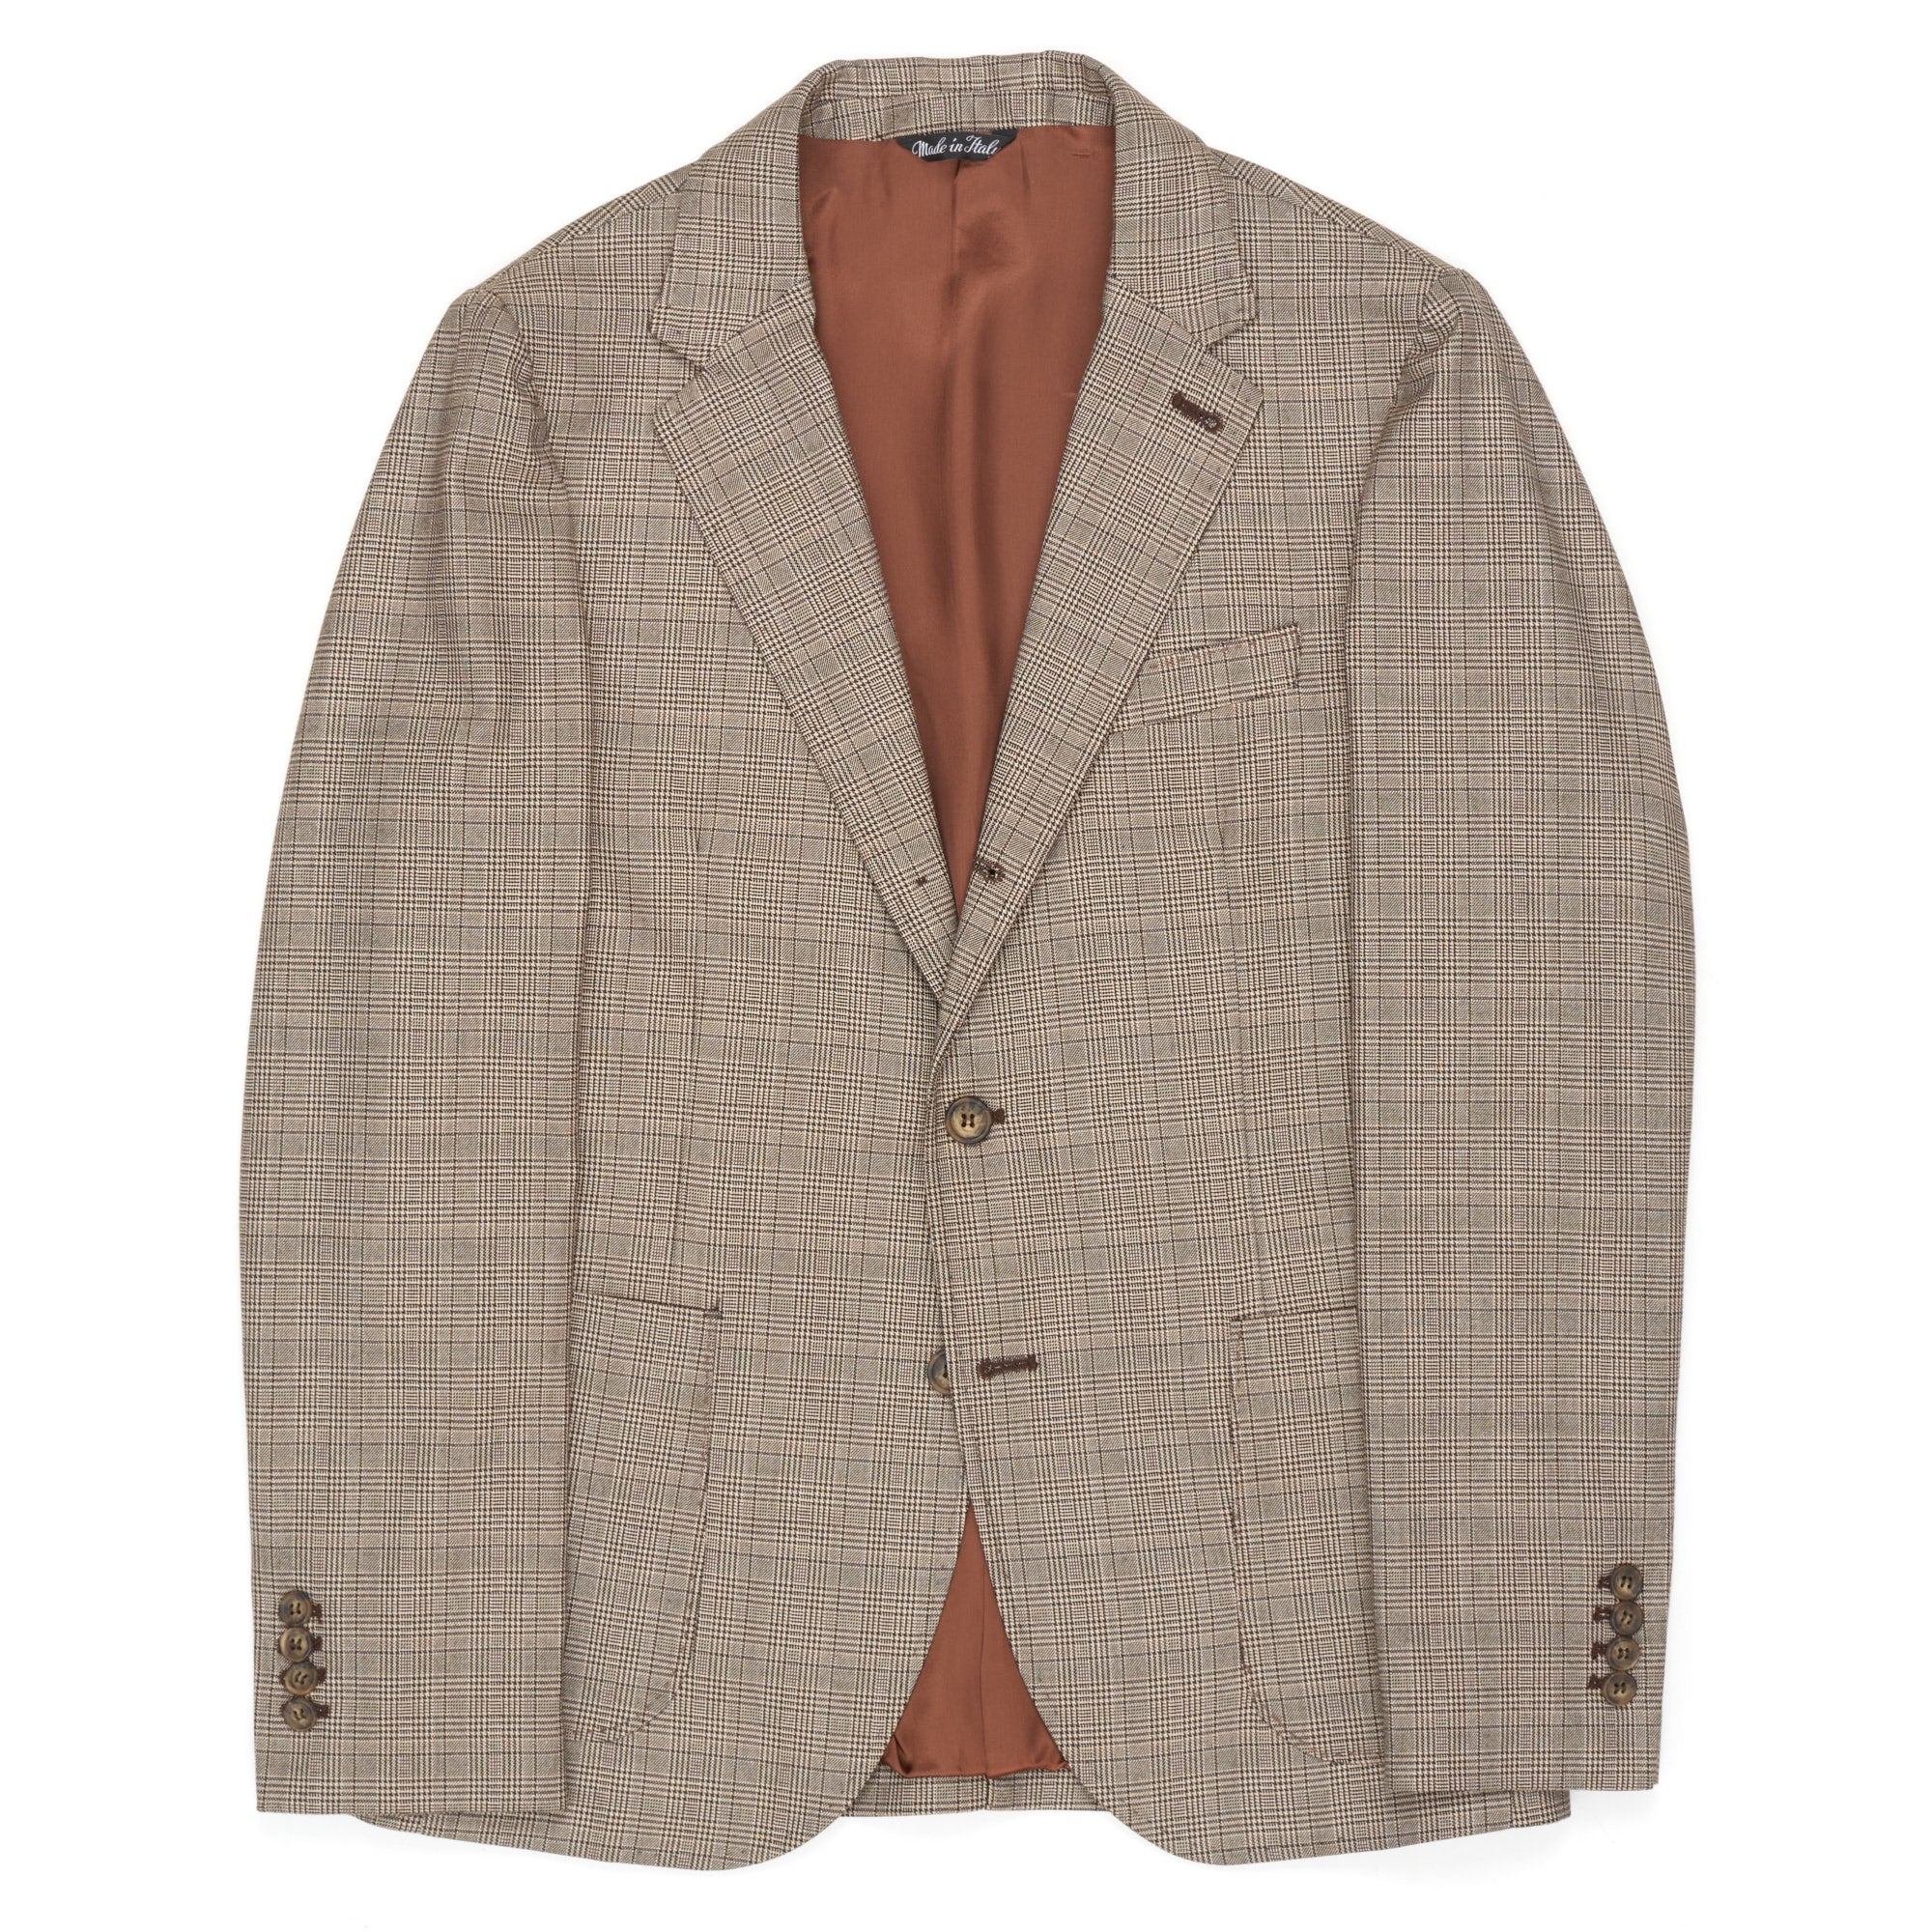 VINCENZO PALUMBO "Alfred" Tan Plaid Wool Jacket EU 46 NEW US 34 Slim Fit